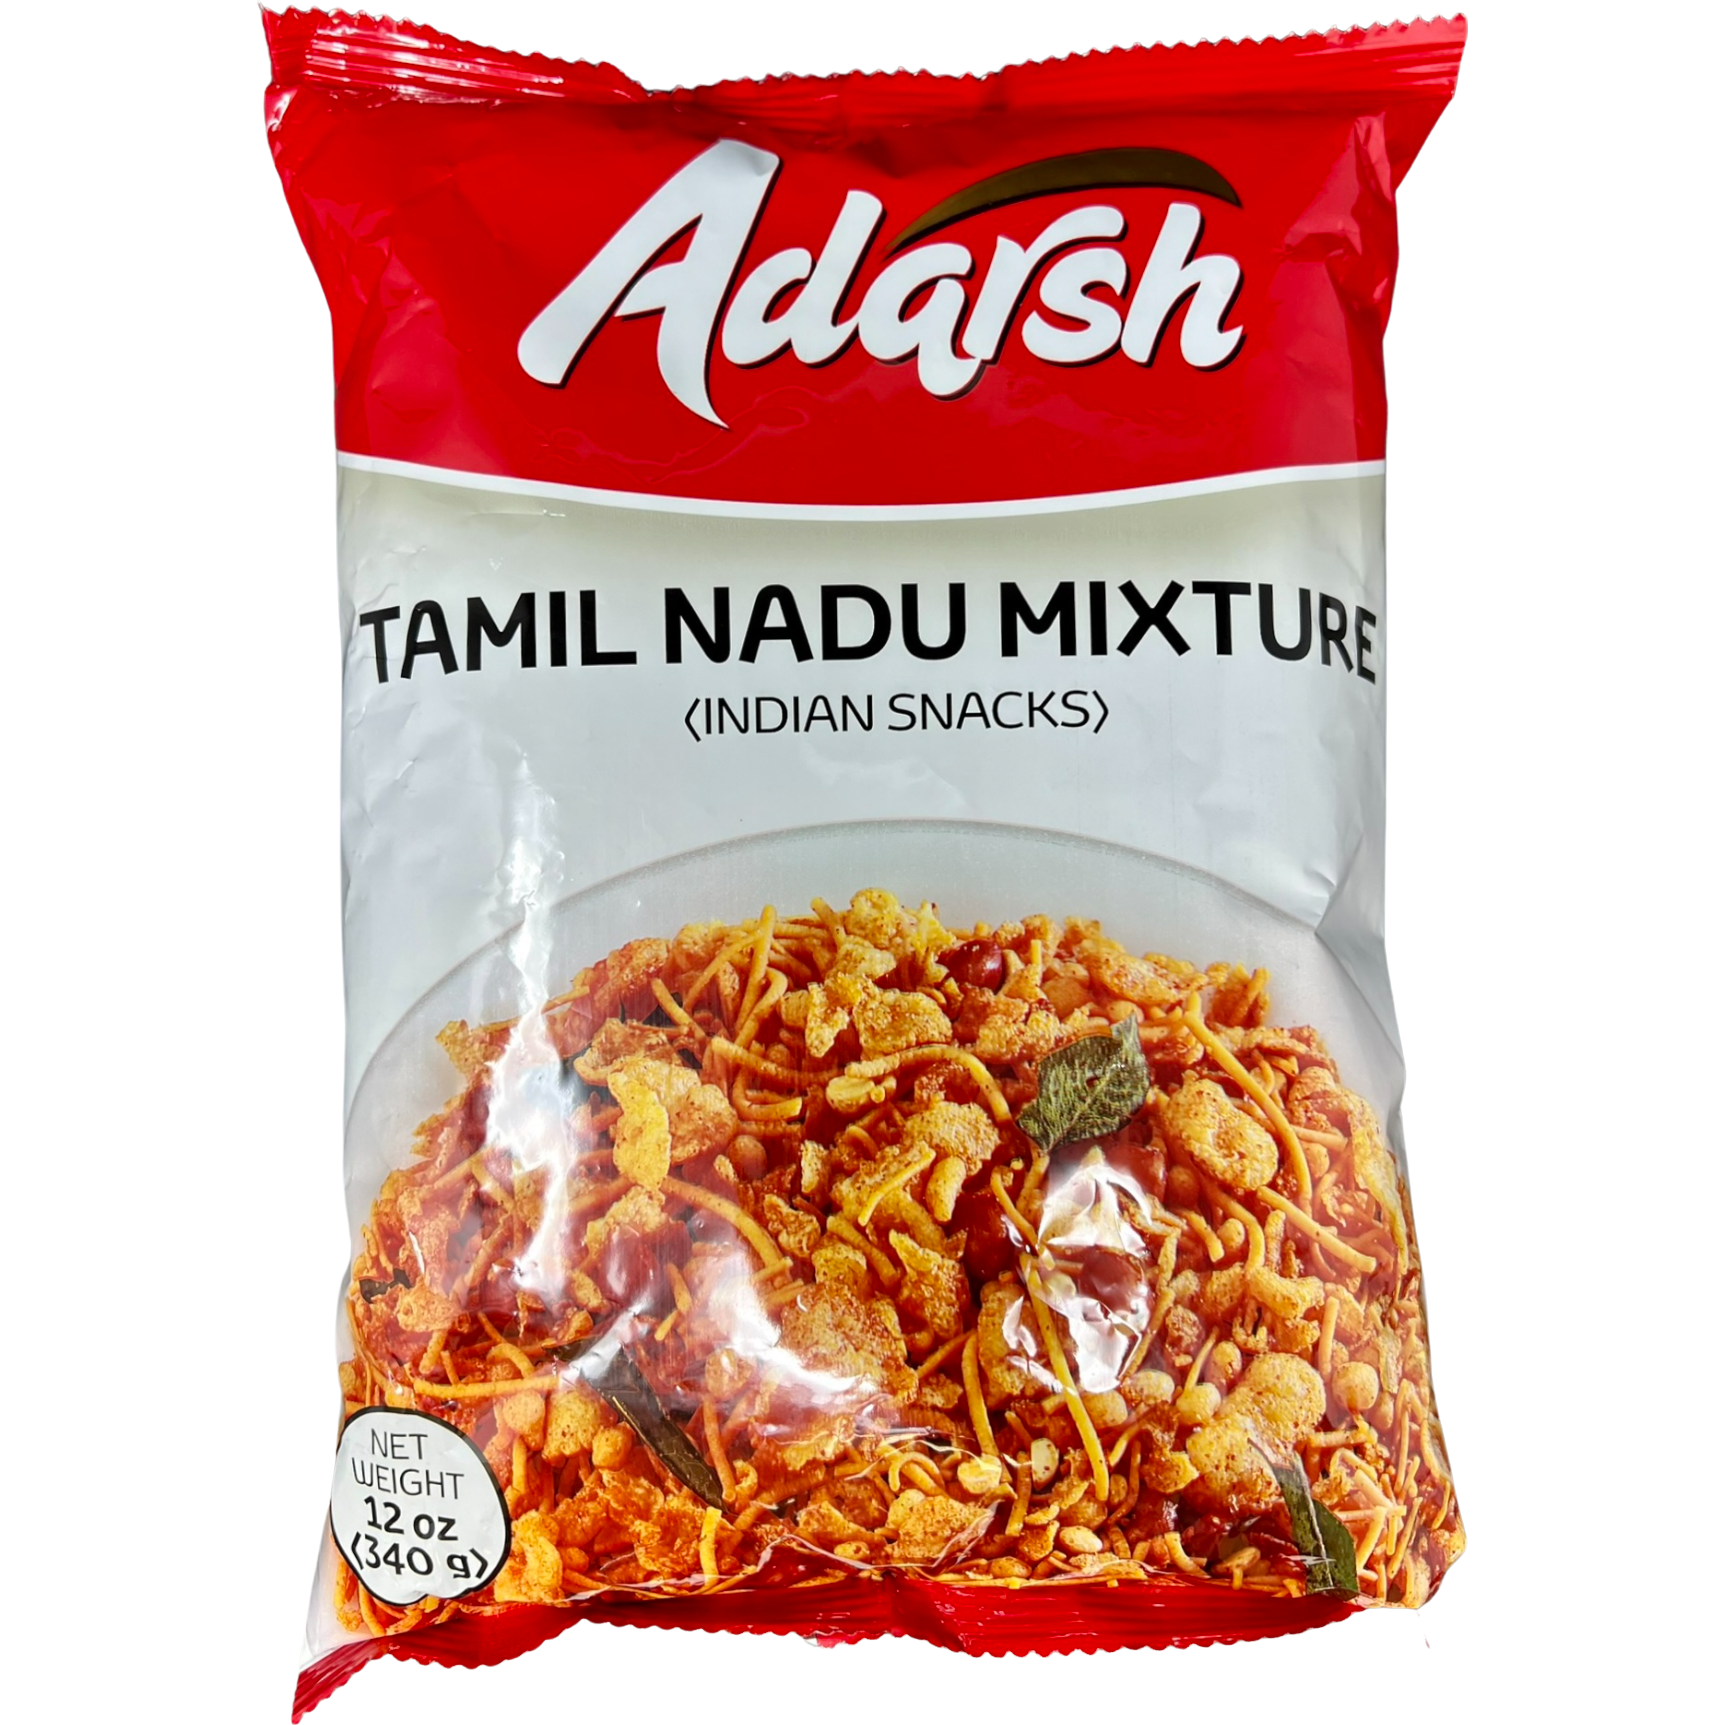 Adarsh Tamil Nadu Mixture - 340 Gm (12 Oz)